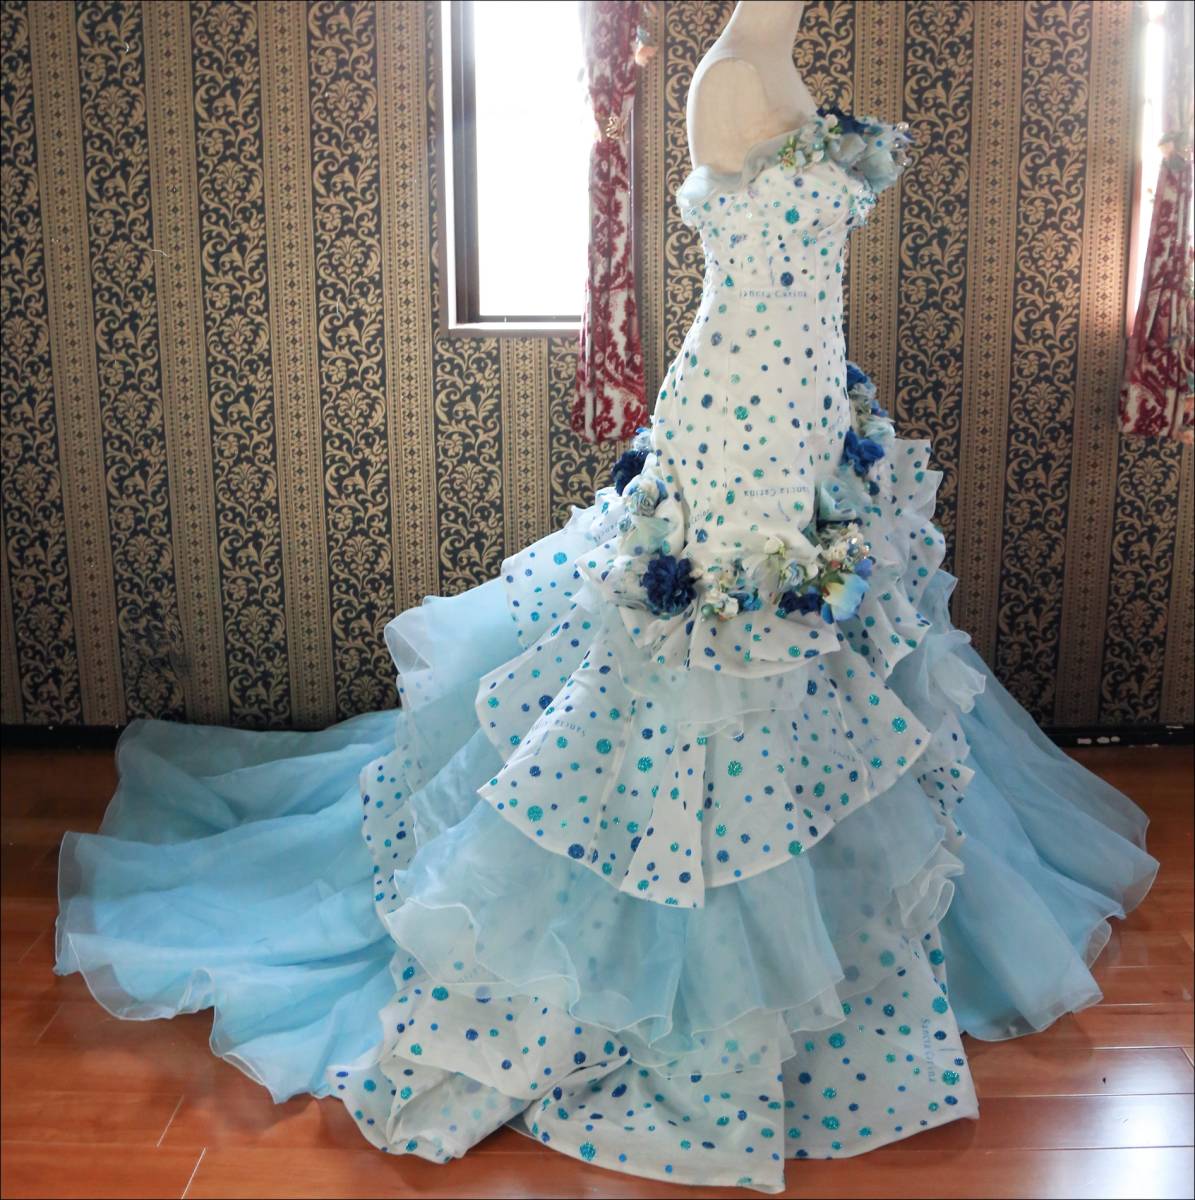 Sancta Carina thank takalina2WAY design . Mini dress also become high class wedding dress 7 number S size light blue color dress 